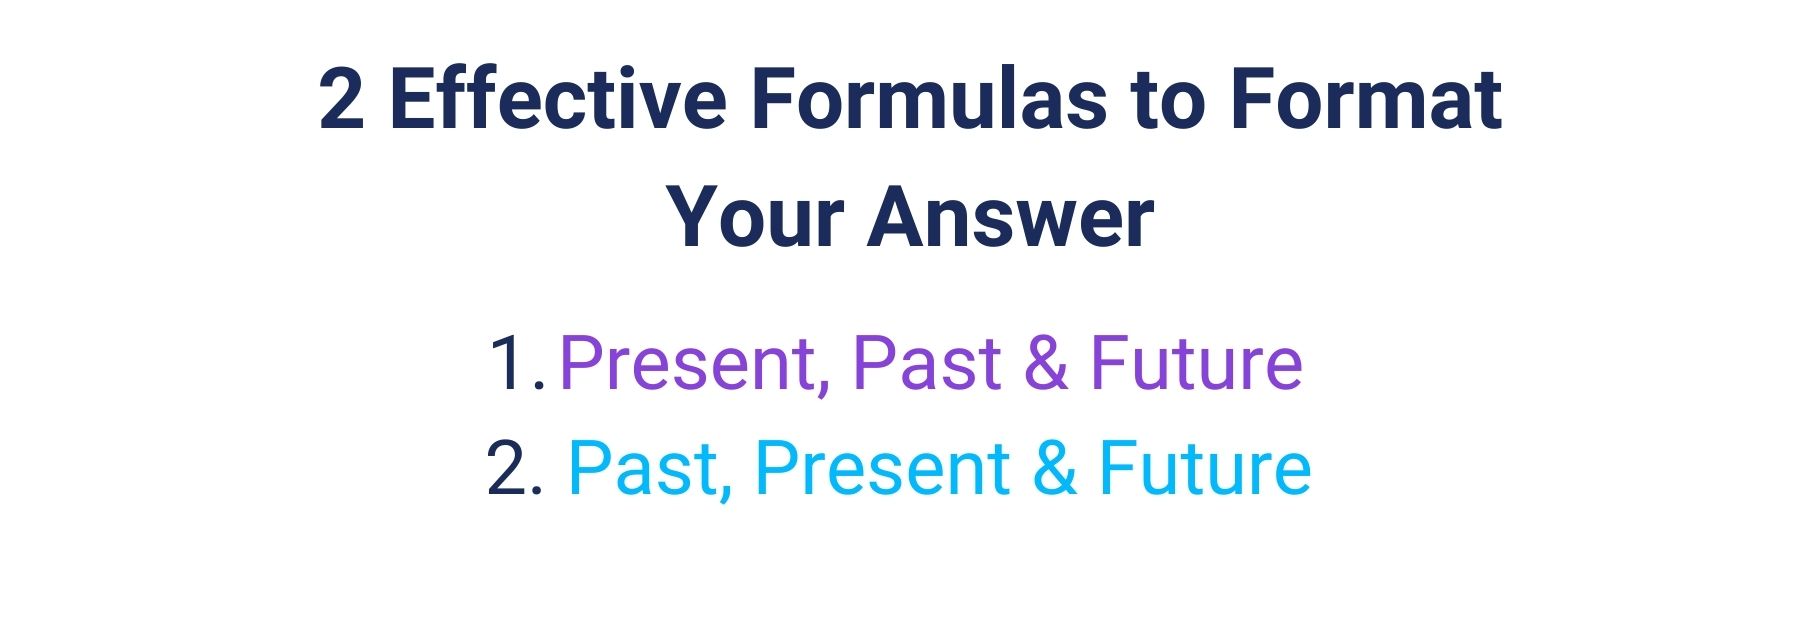 formulas for formatting the response